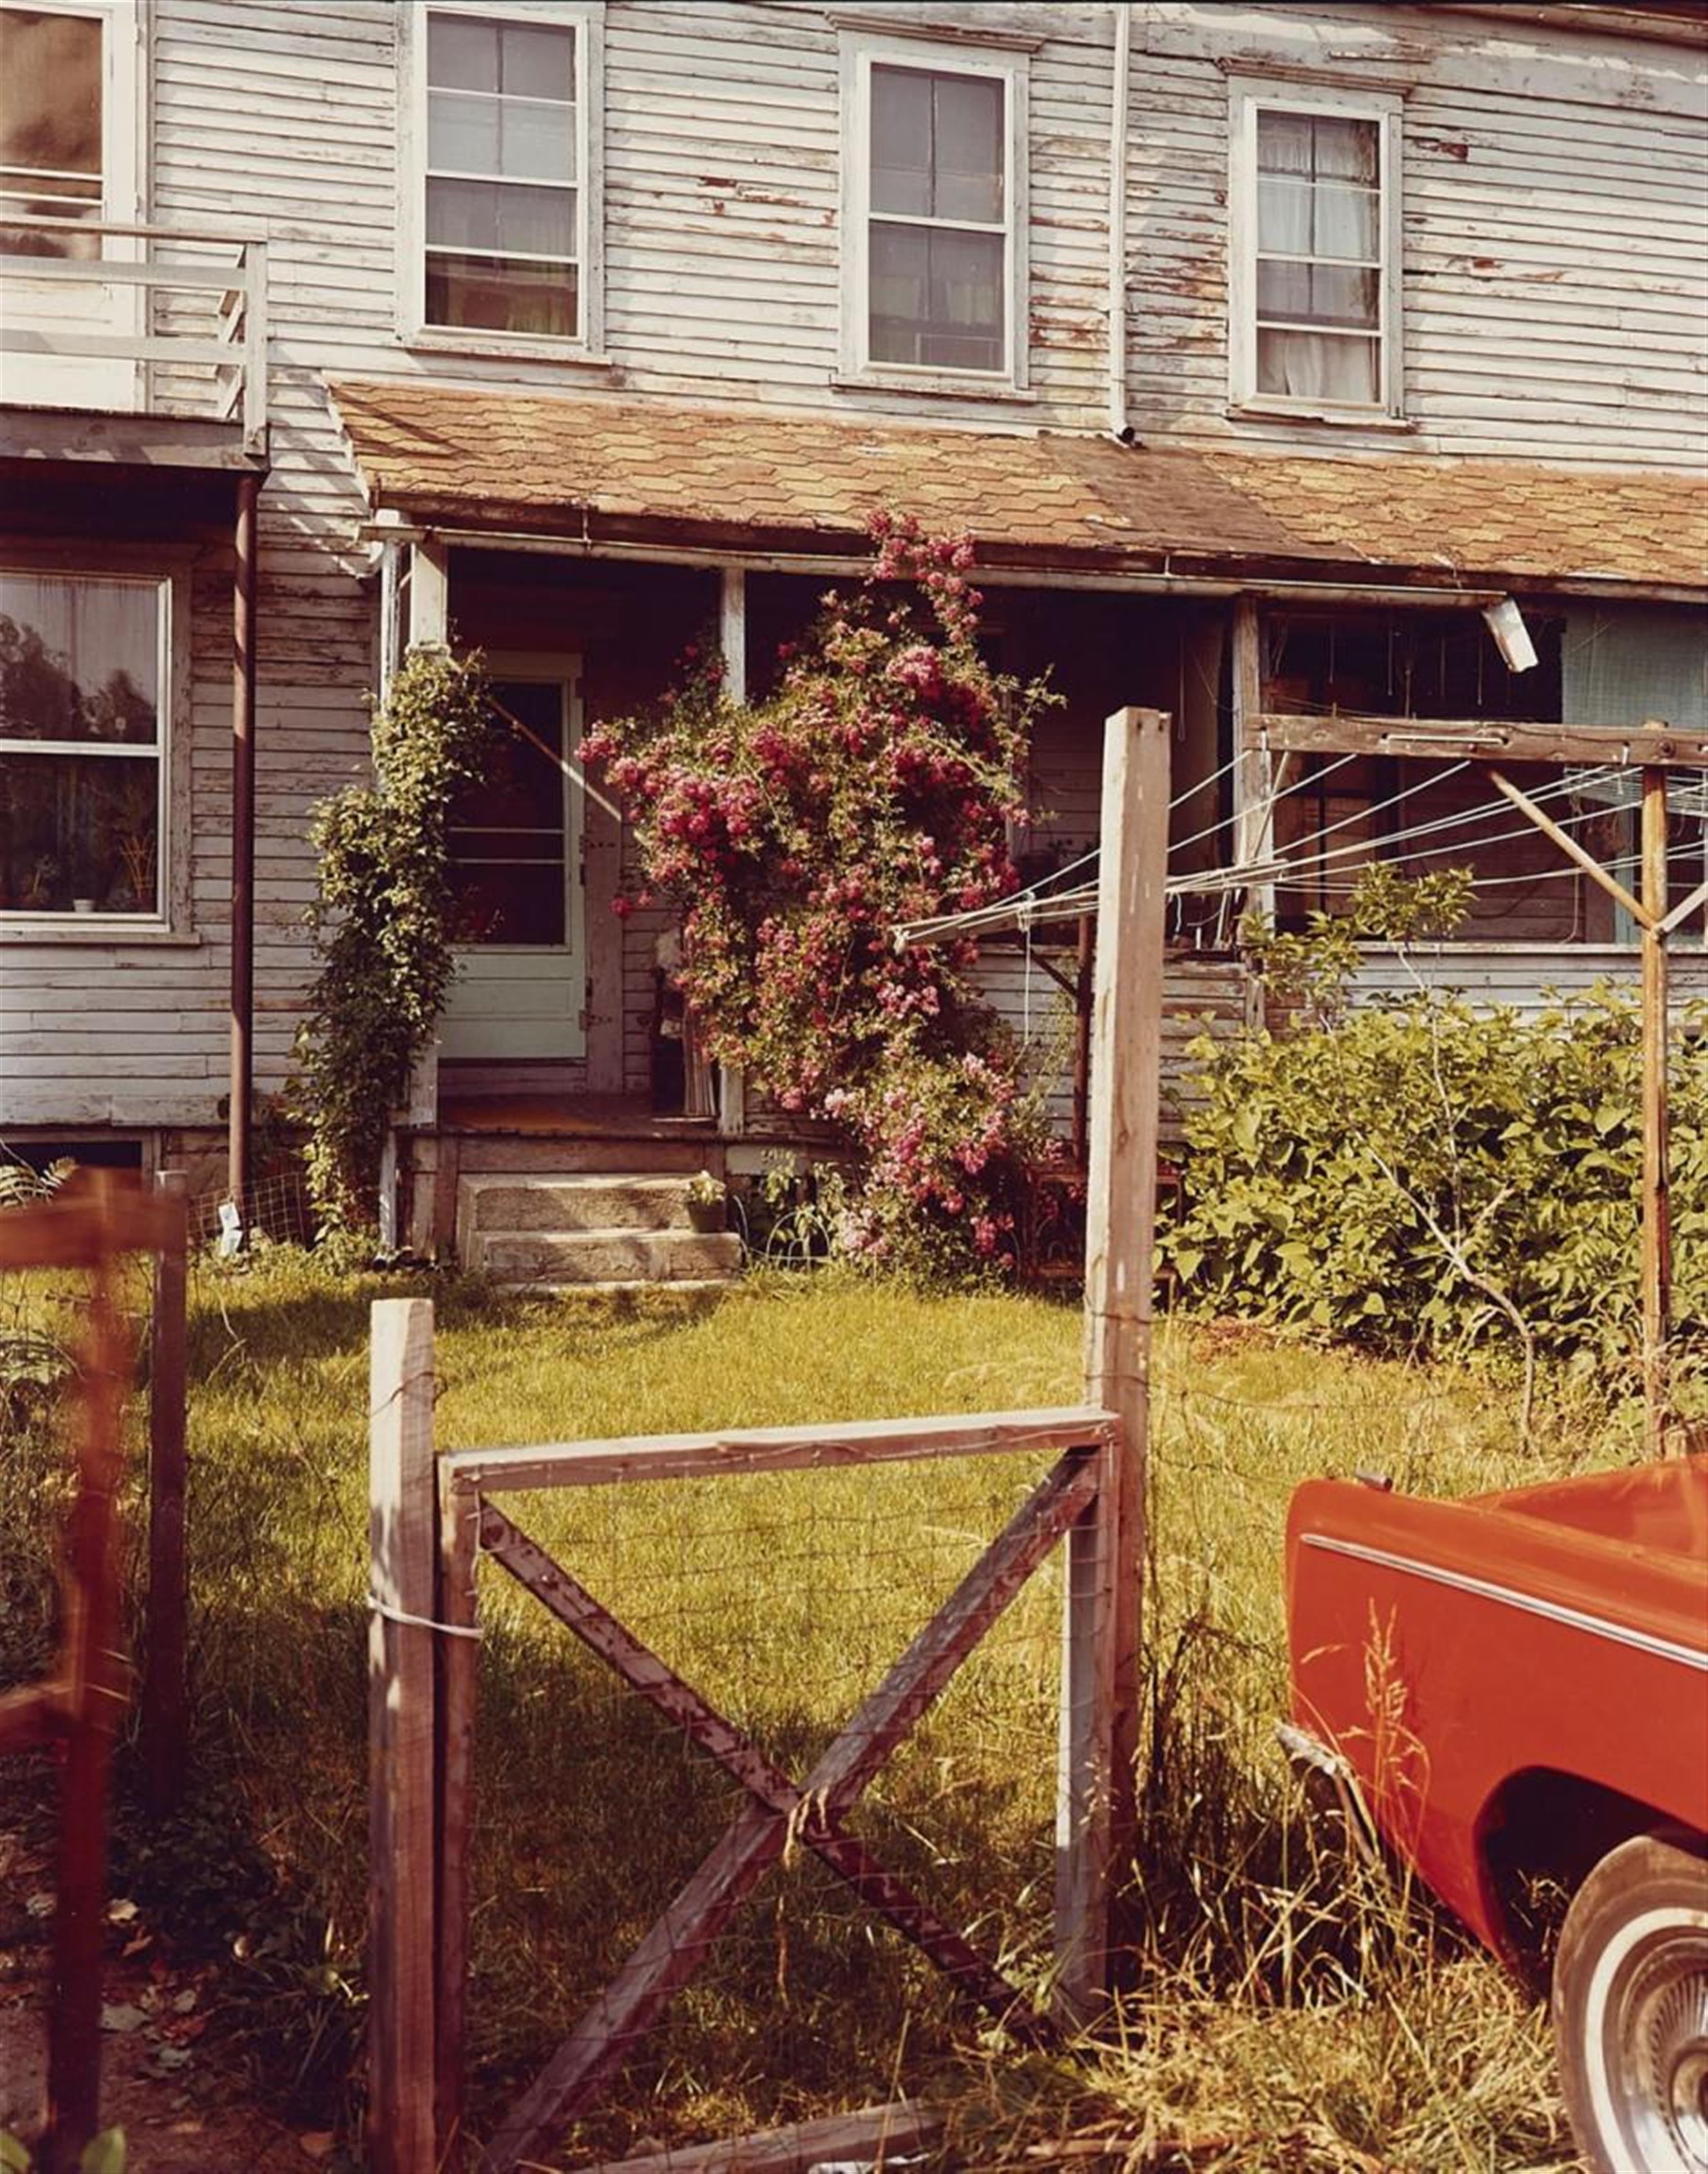 Stephen Shore - Washington Ave., North Adams, Massachusetts July 13, 1974 - image-1